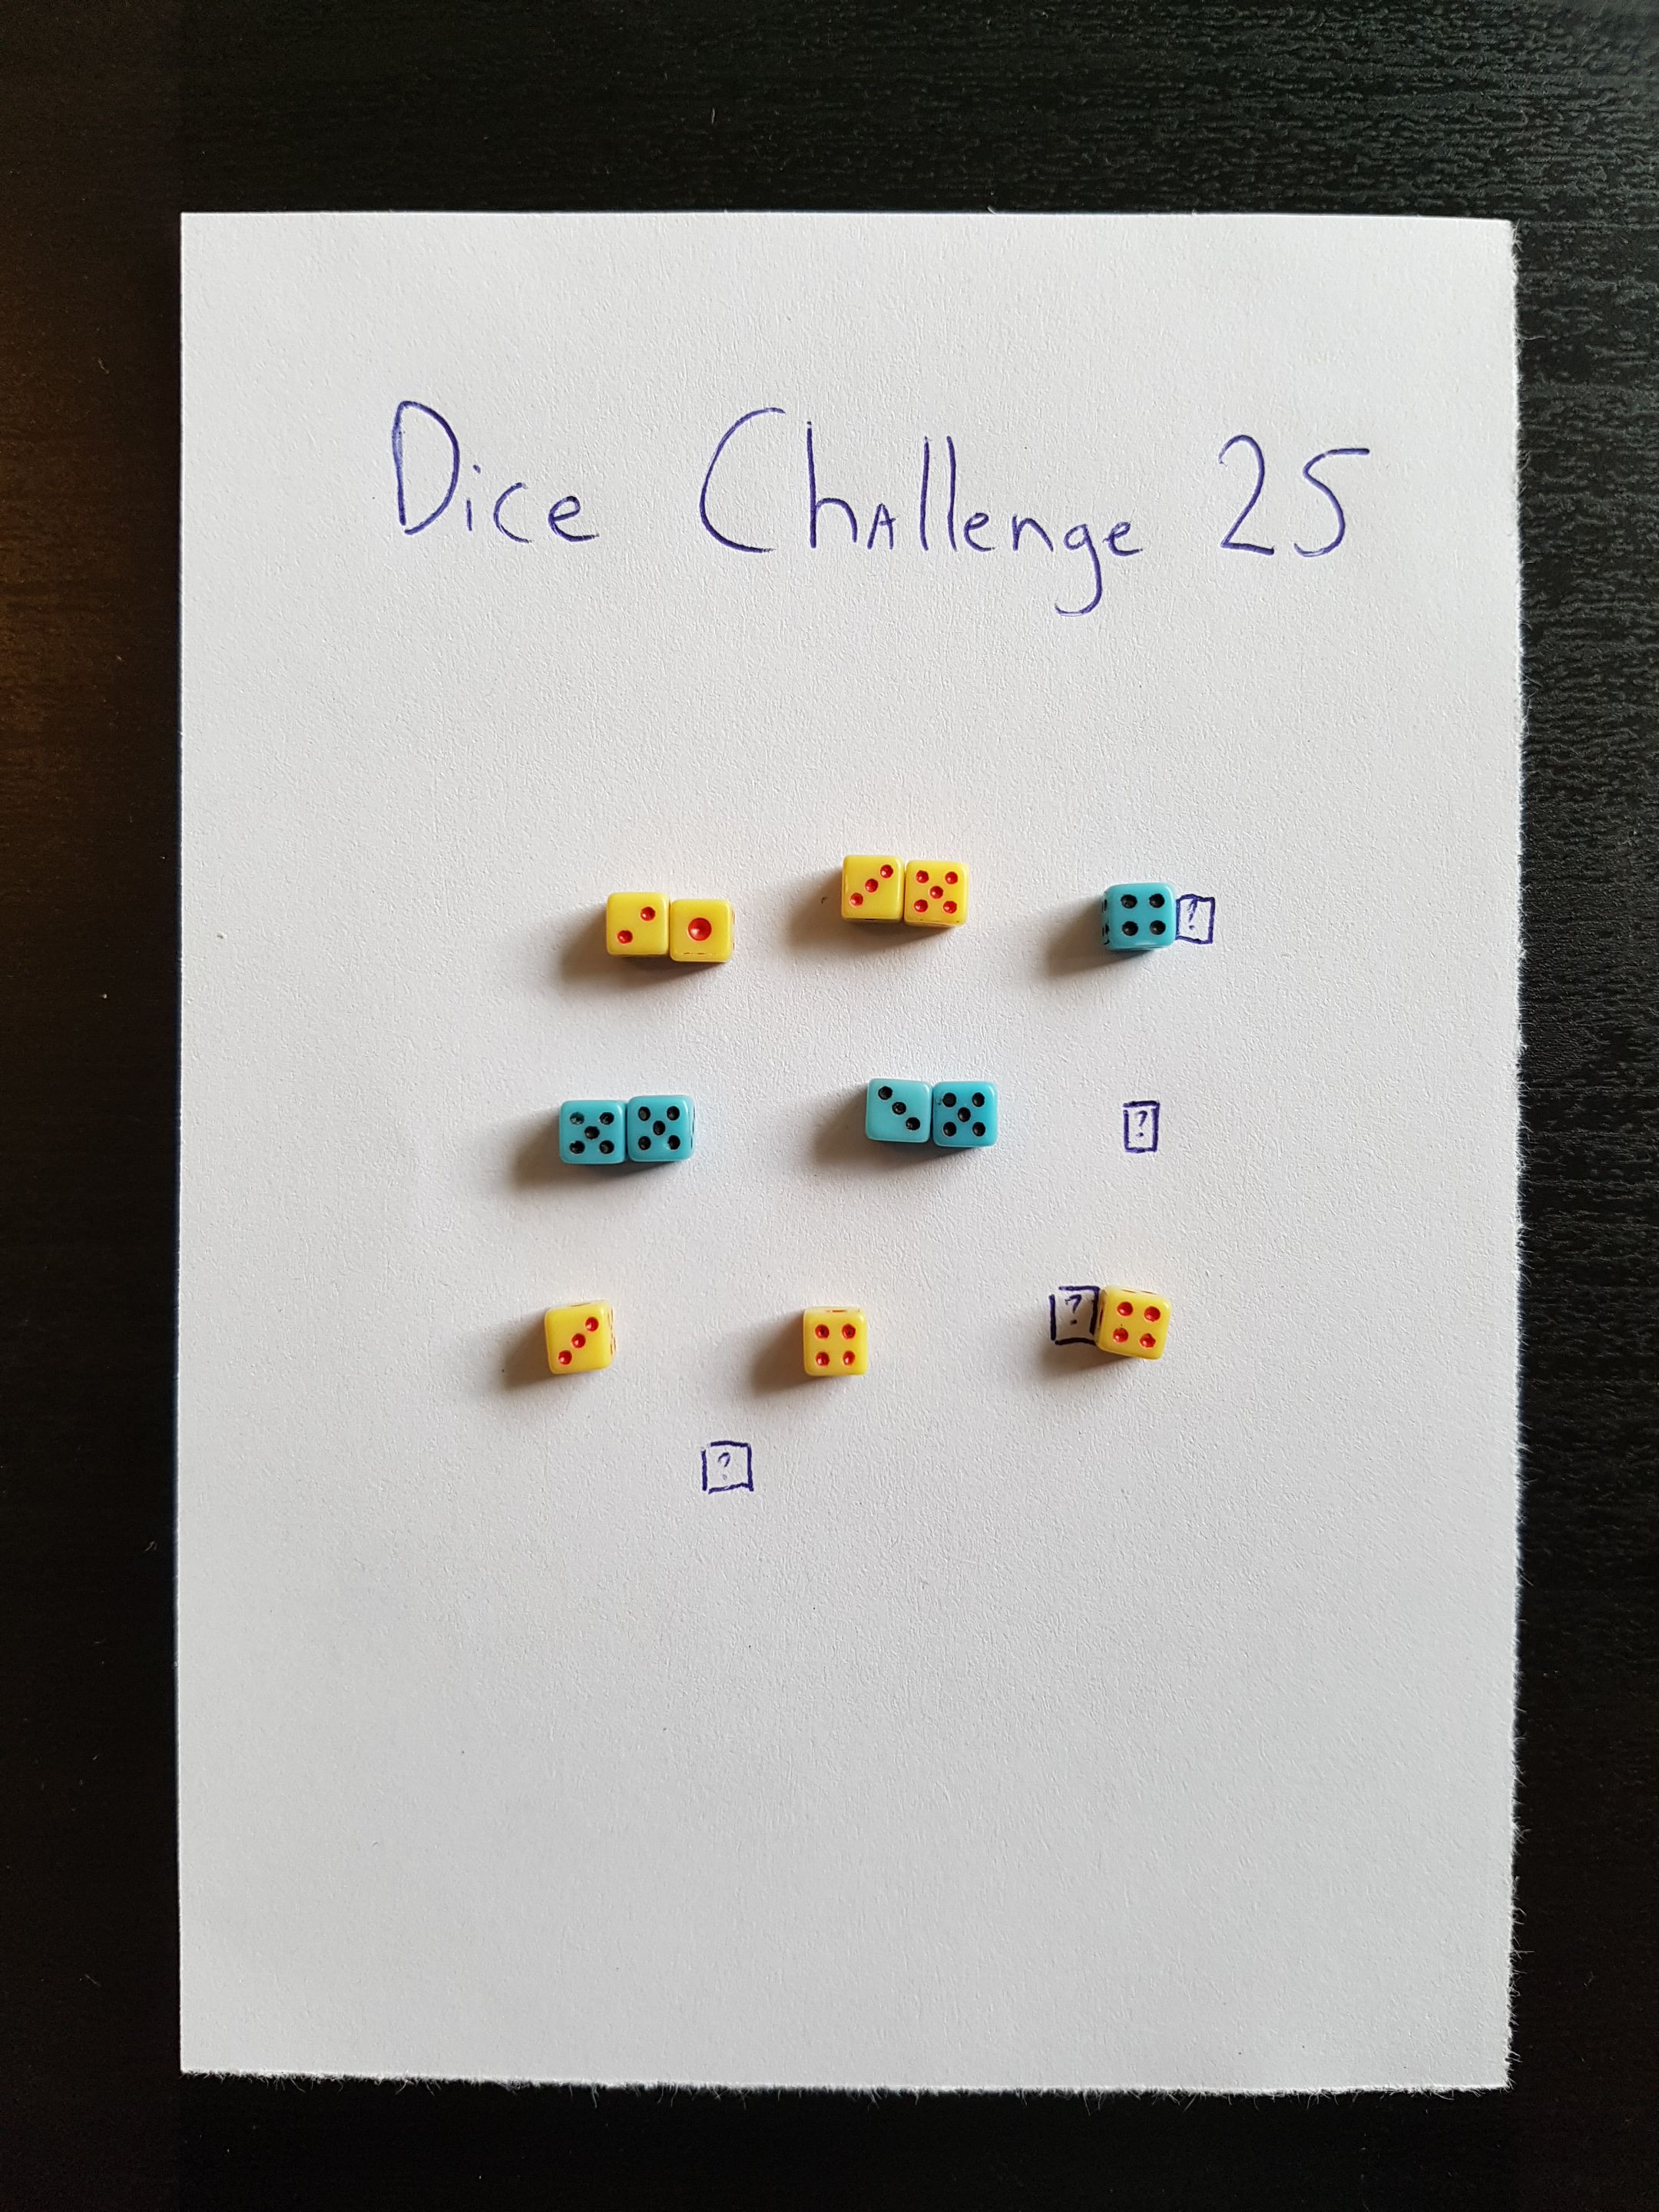 Dice Challenge 25.jpg